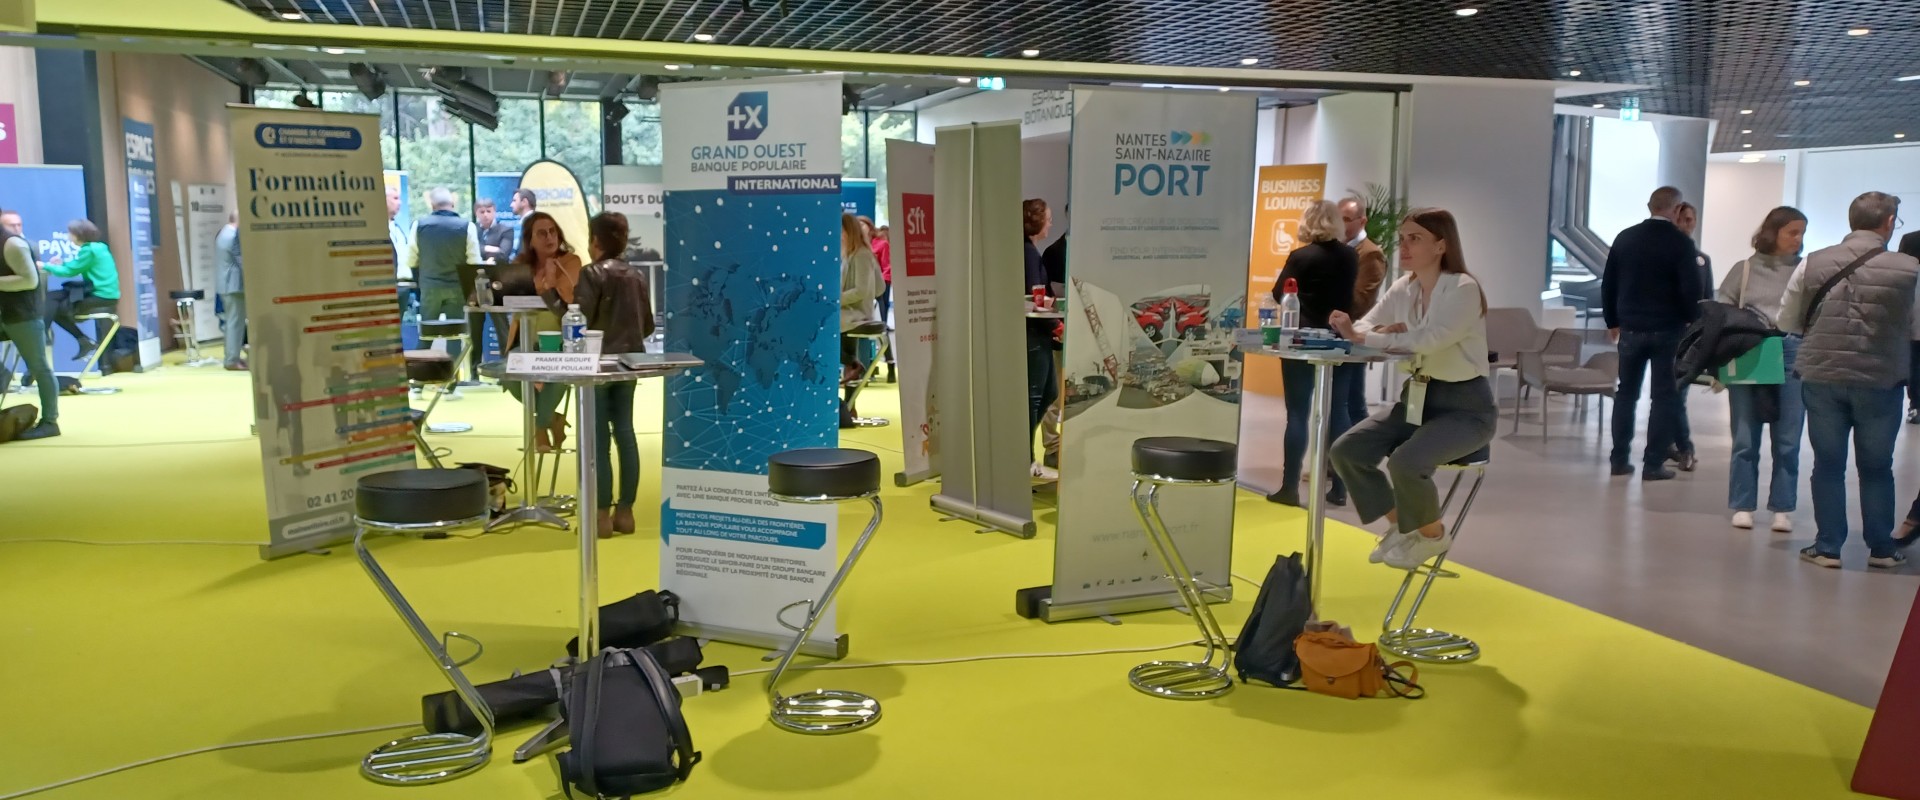 Nantes ‒ Saint Nazaire Port has taken part in International Week